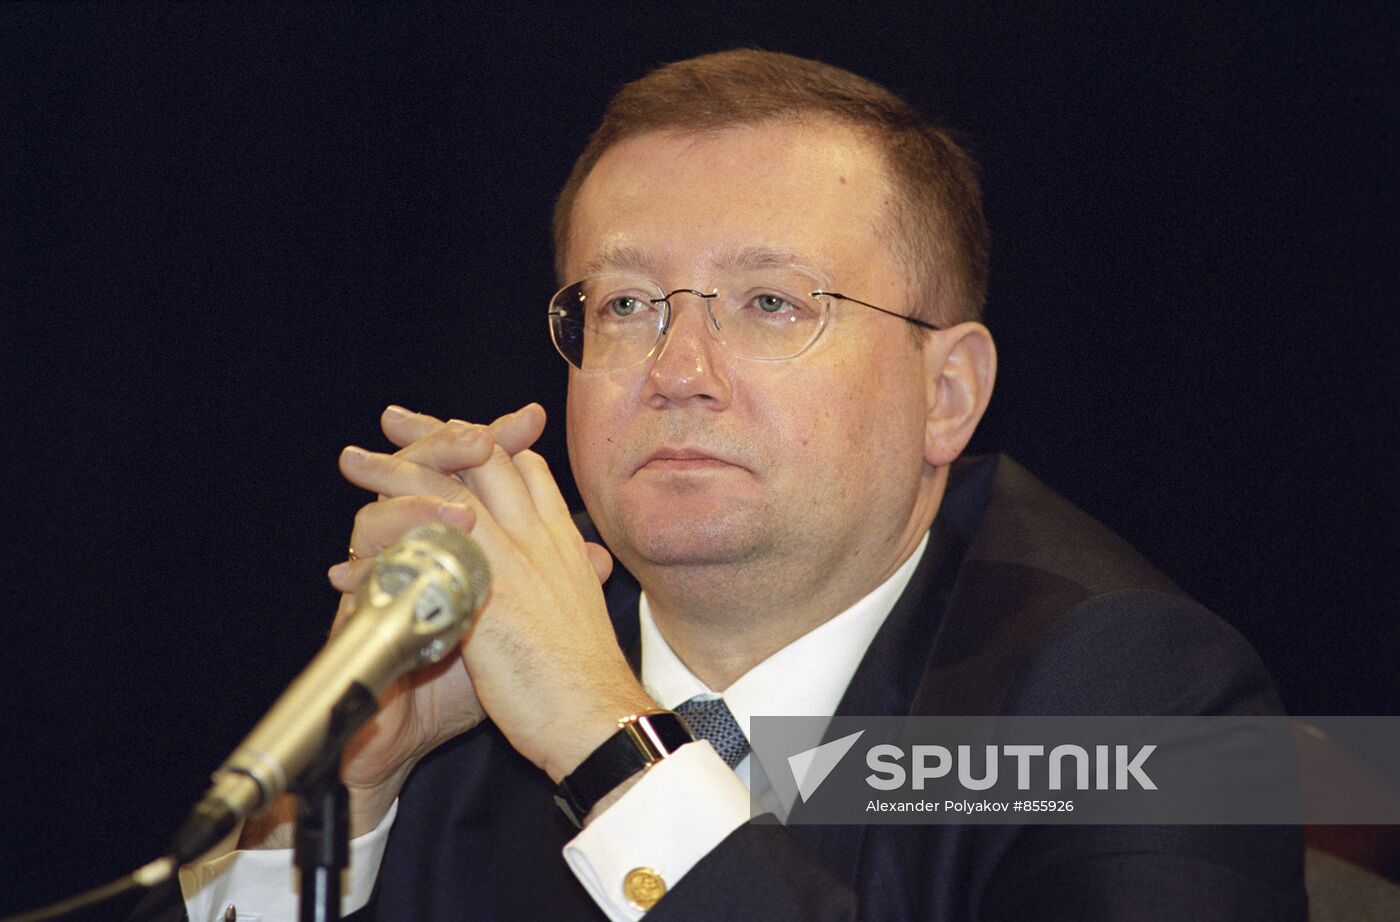 Russian Foreign Ministry spokesman Yakovenko